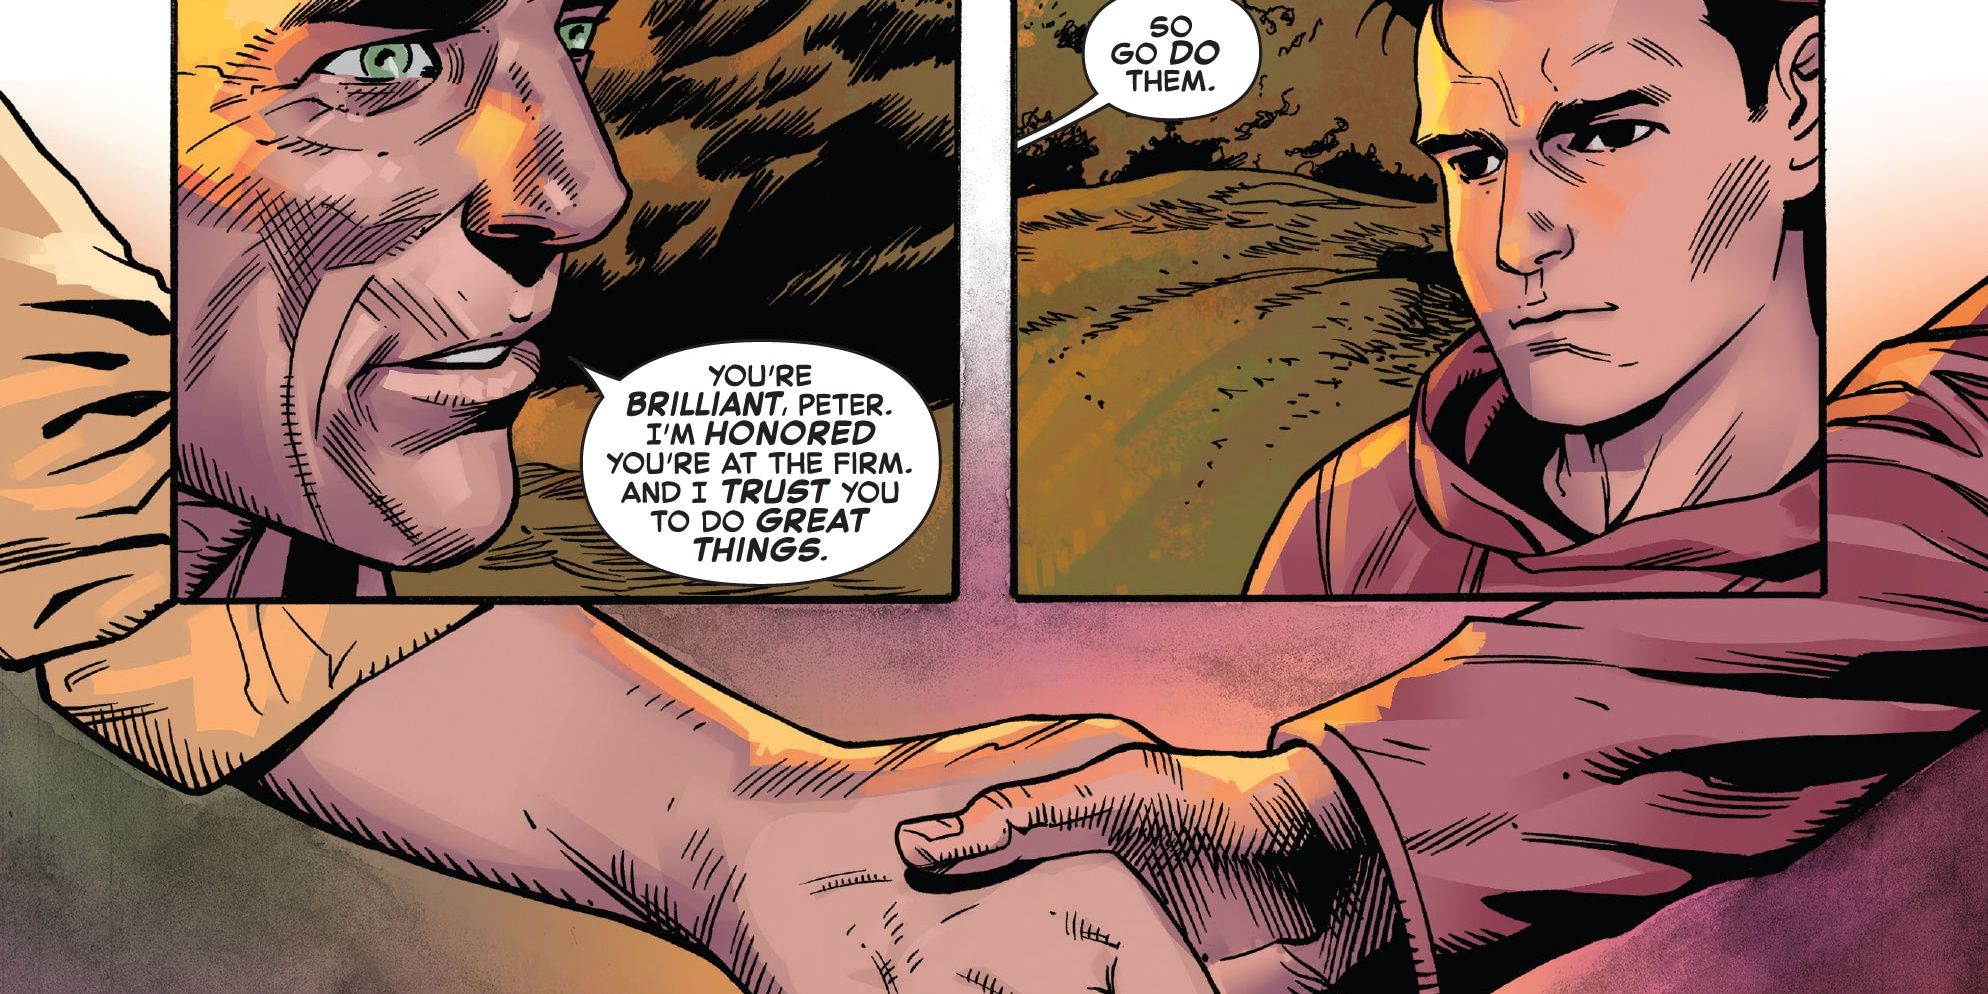 Norman Osborn giving Peter Parker carte blanche in Gold Goblin #4